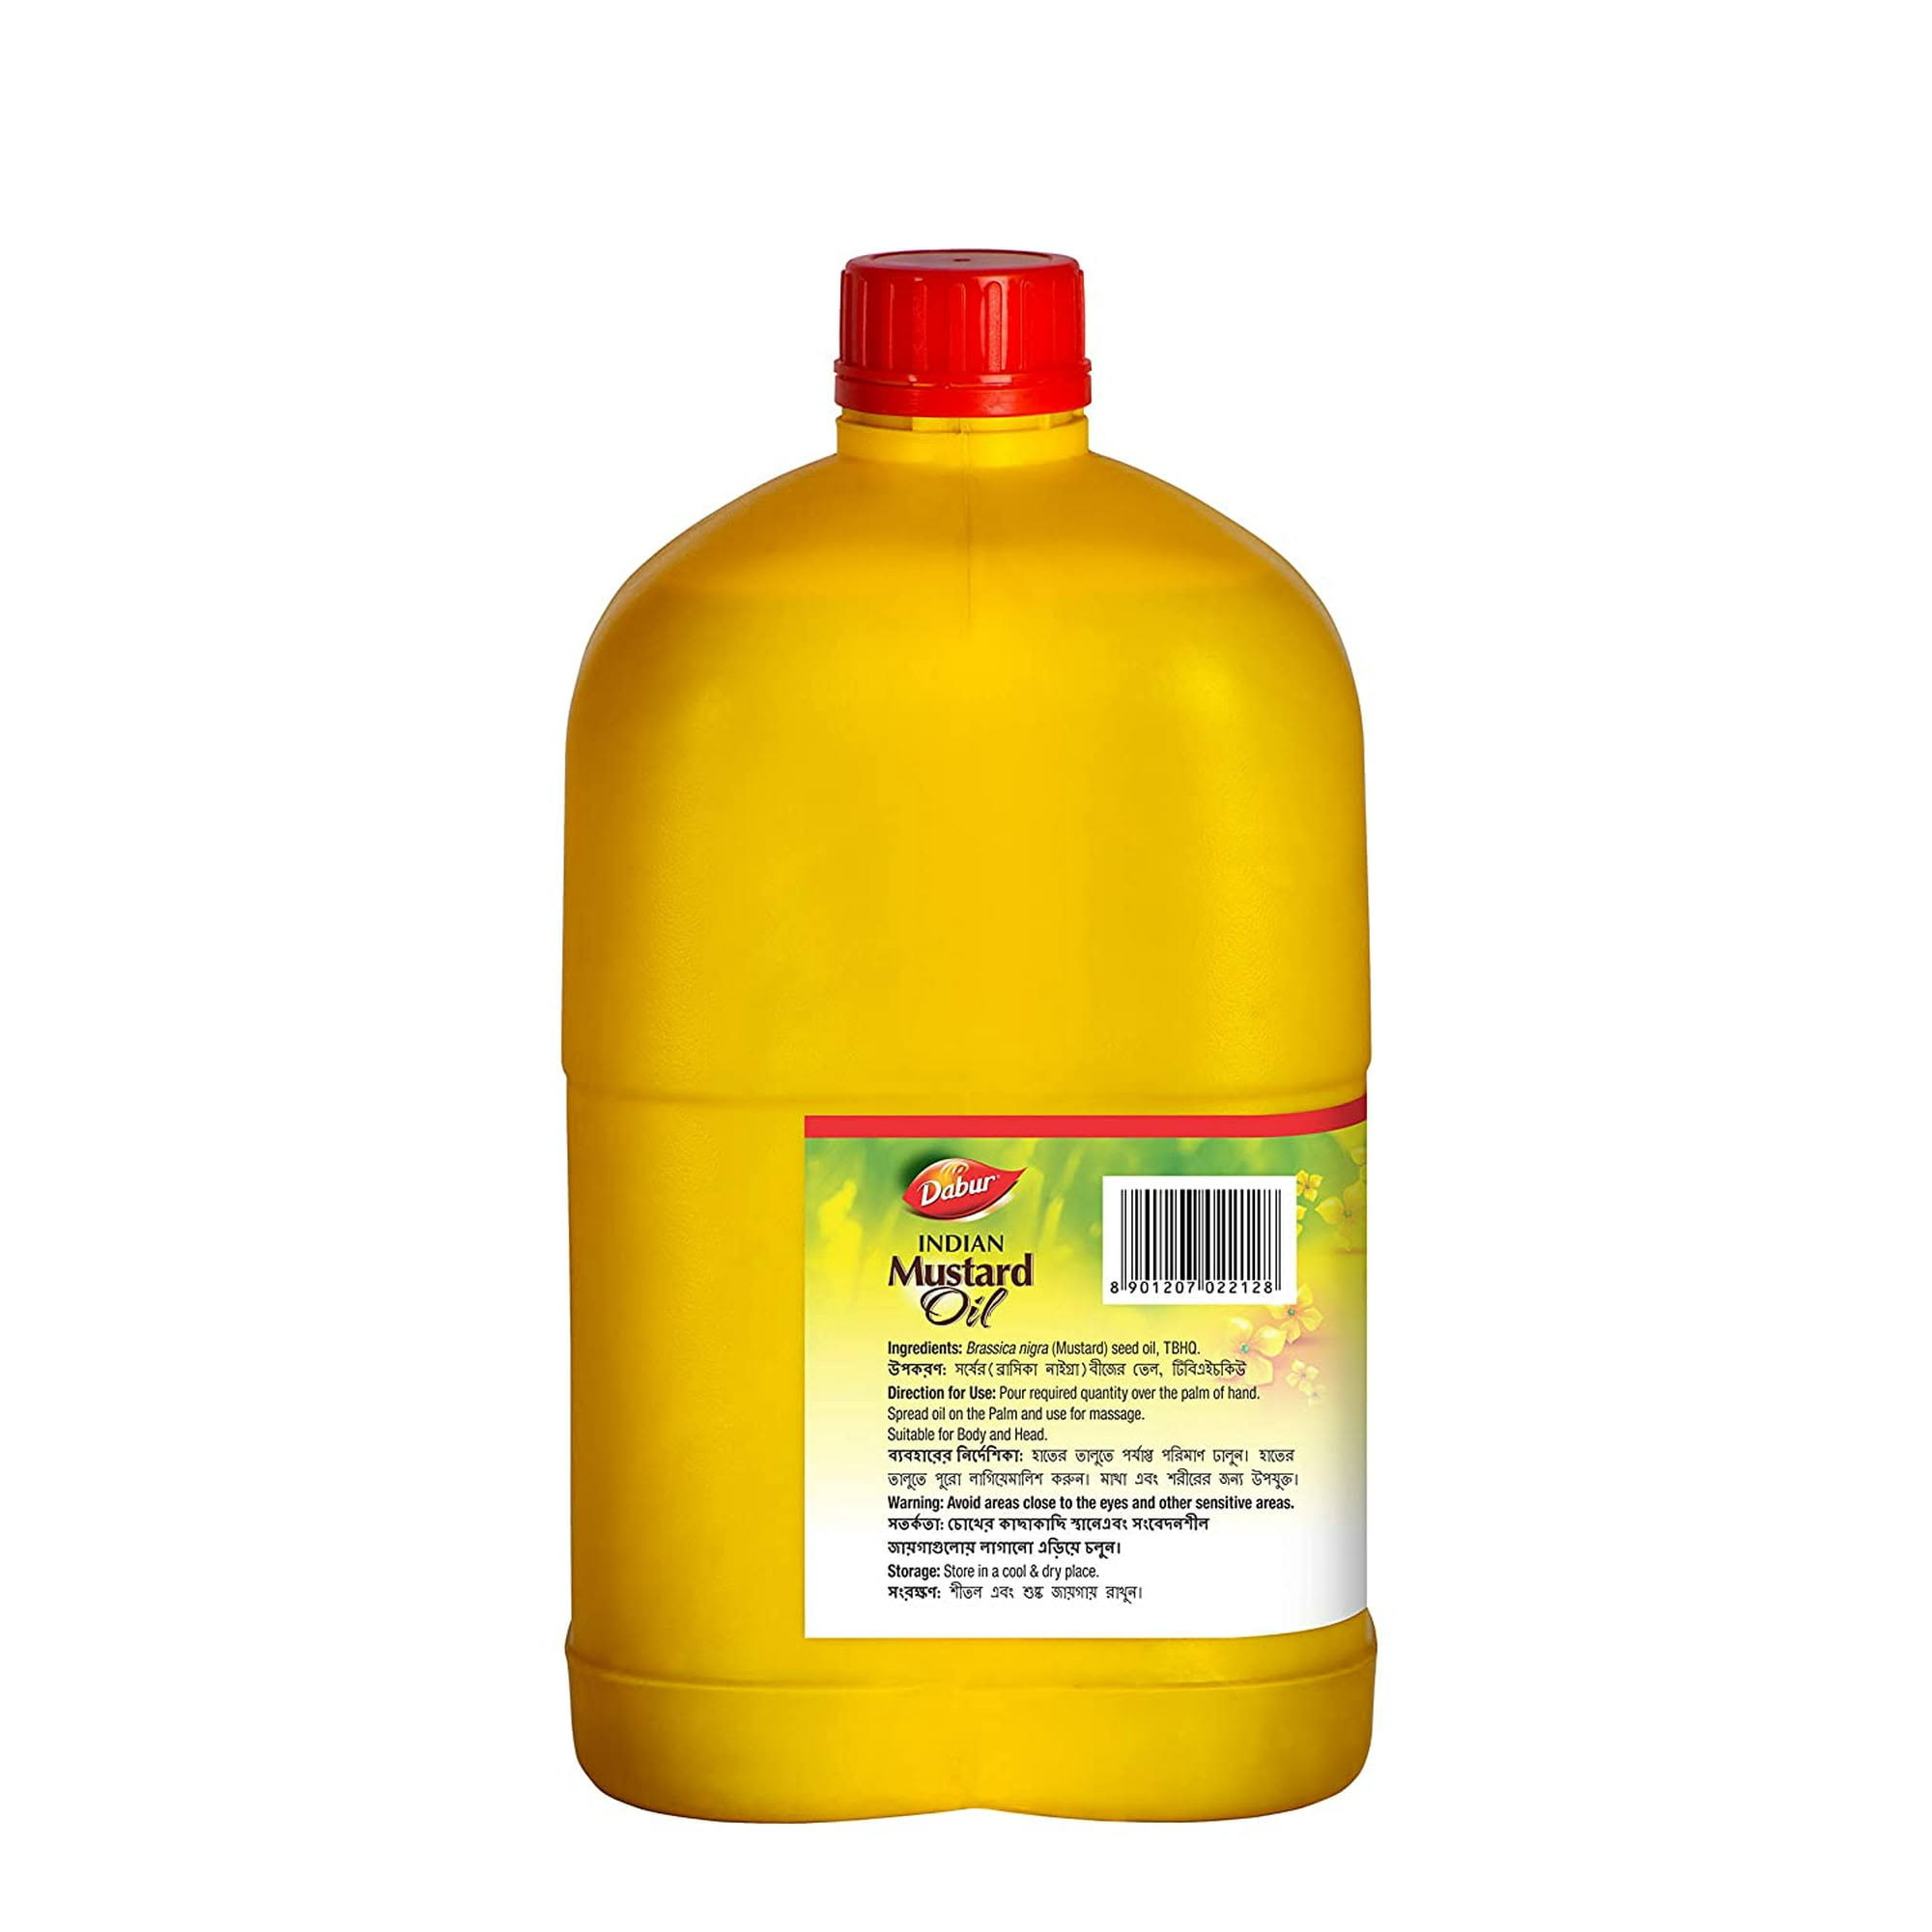 Dabur Indian Mustard Oil 2.75L